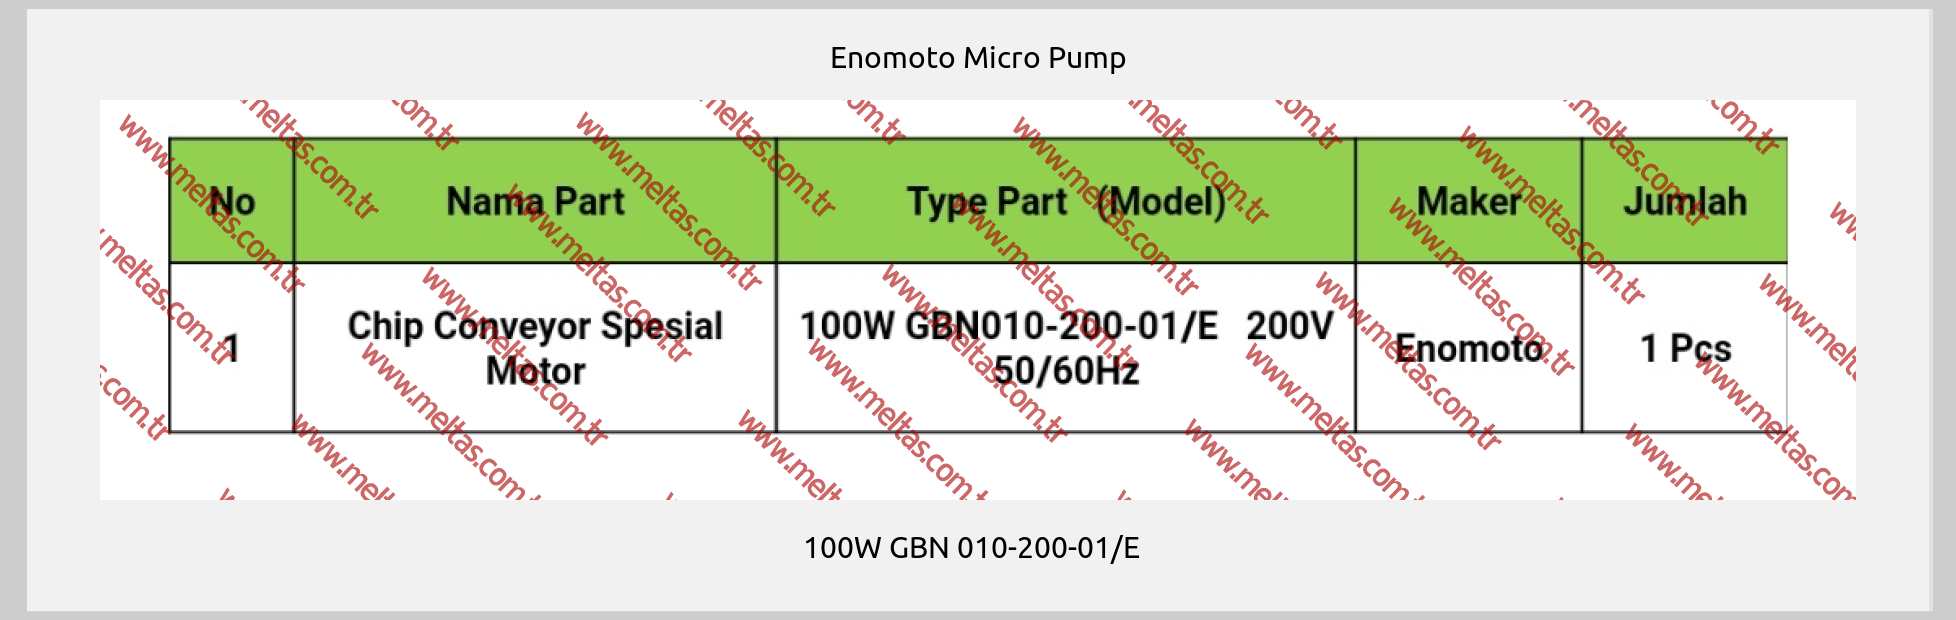 Enomoto Micro Pump - 100W GBN 010-200-01/E  